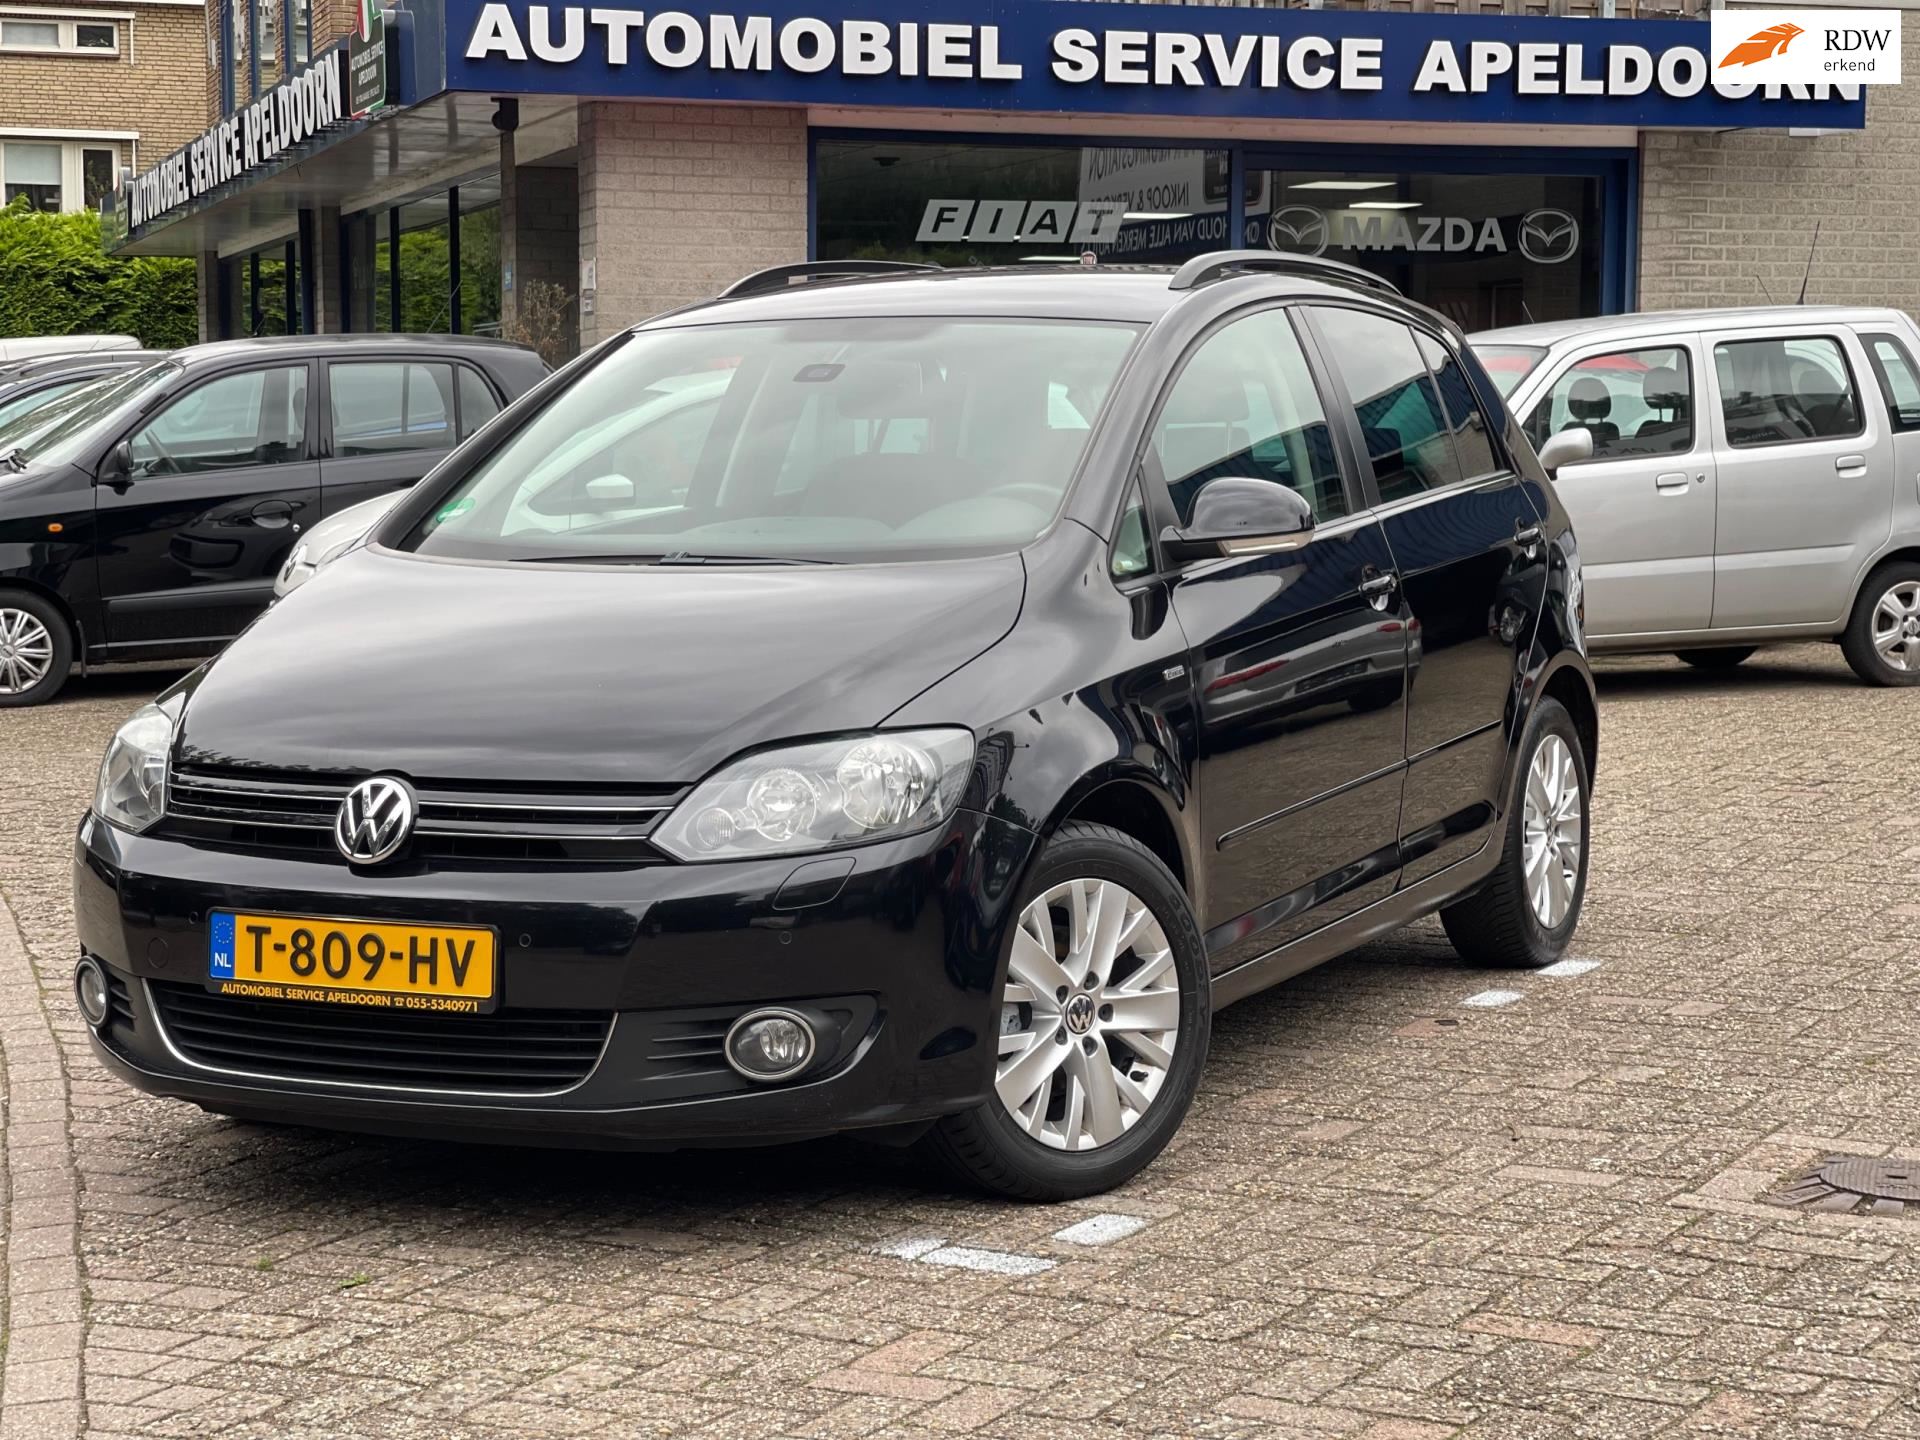 Volkswagen GOLF PLUS occasion - Automobiel Service Apeldoorn